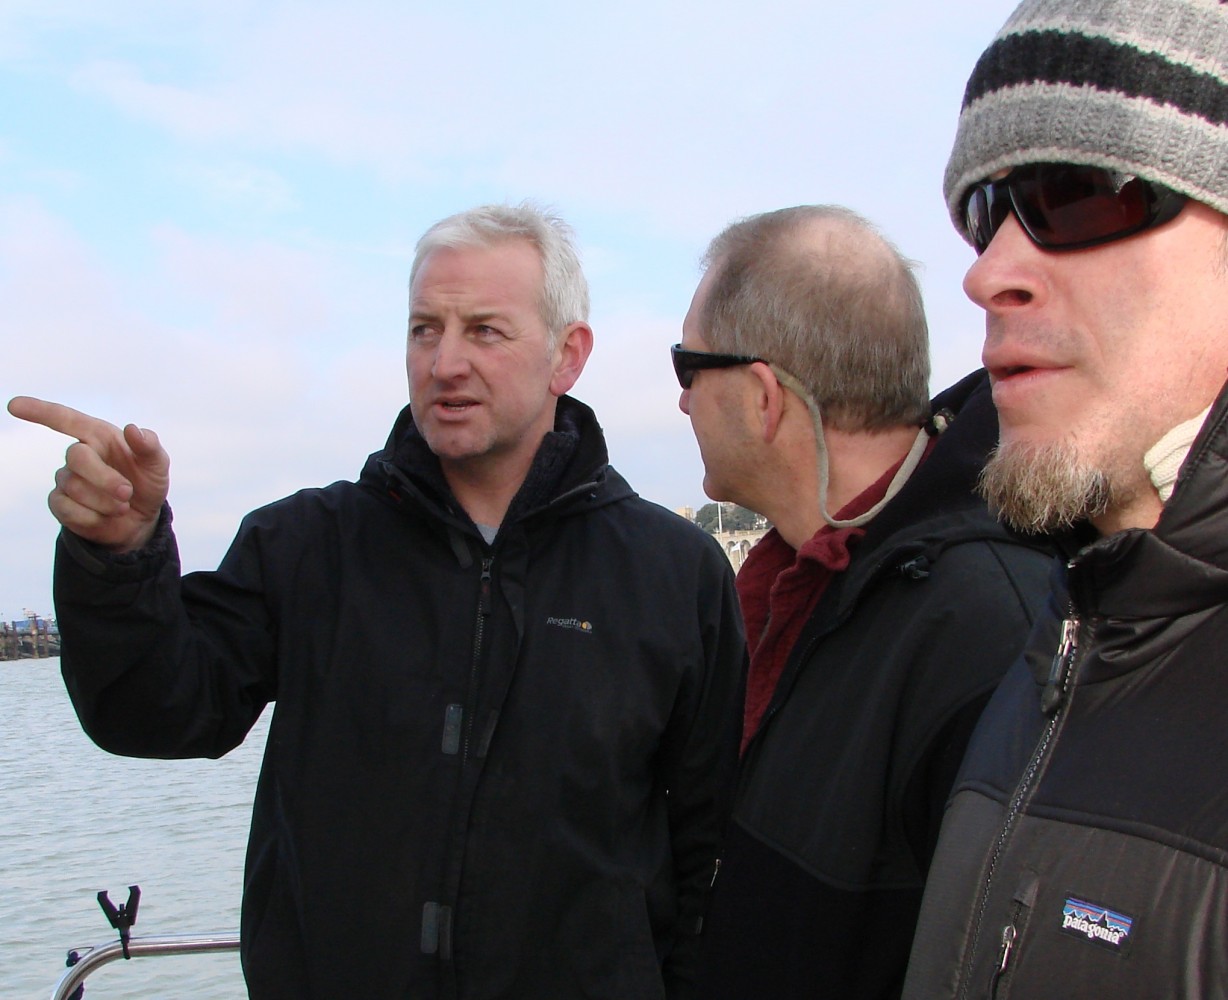 Merlin Jackson advising US fishermen Rick Bellavance and John McMurray